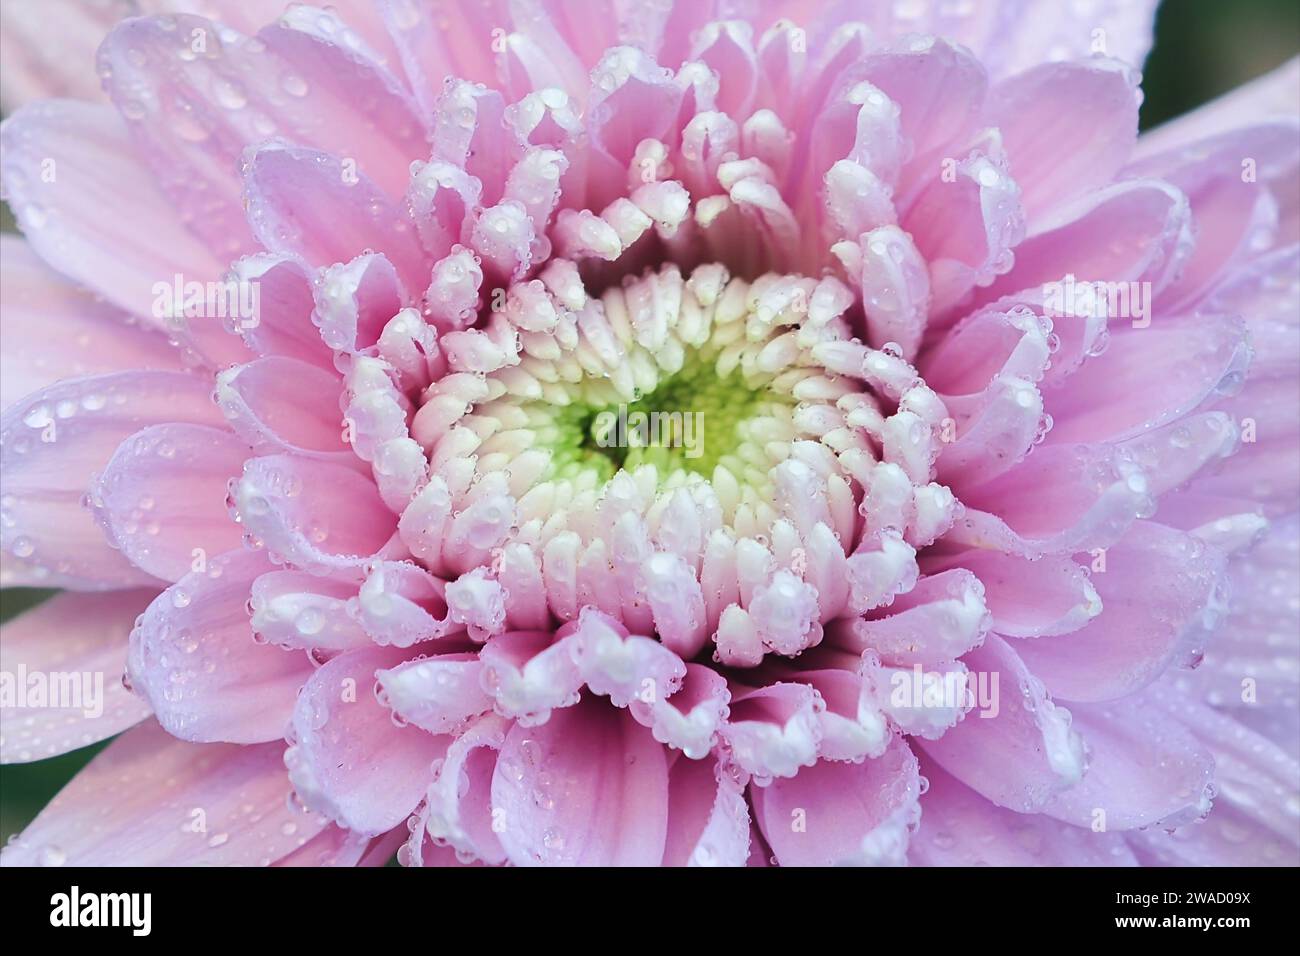 Pink Chrysanthemum Flower Petals in close-up photos Stock Photo